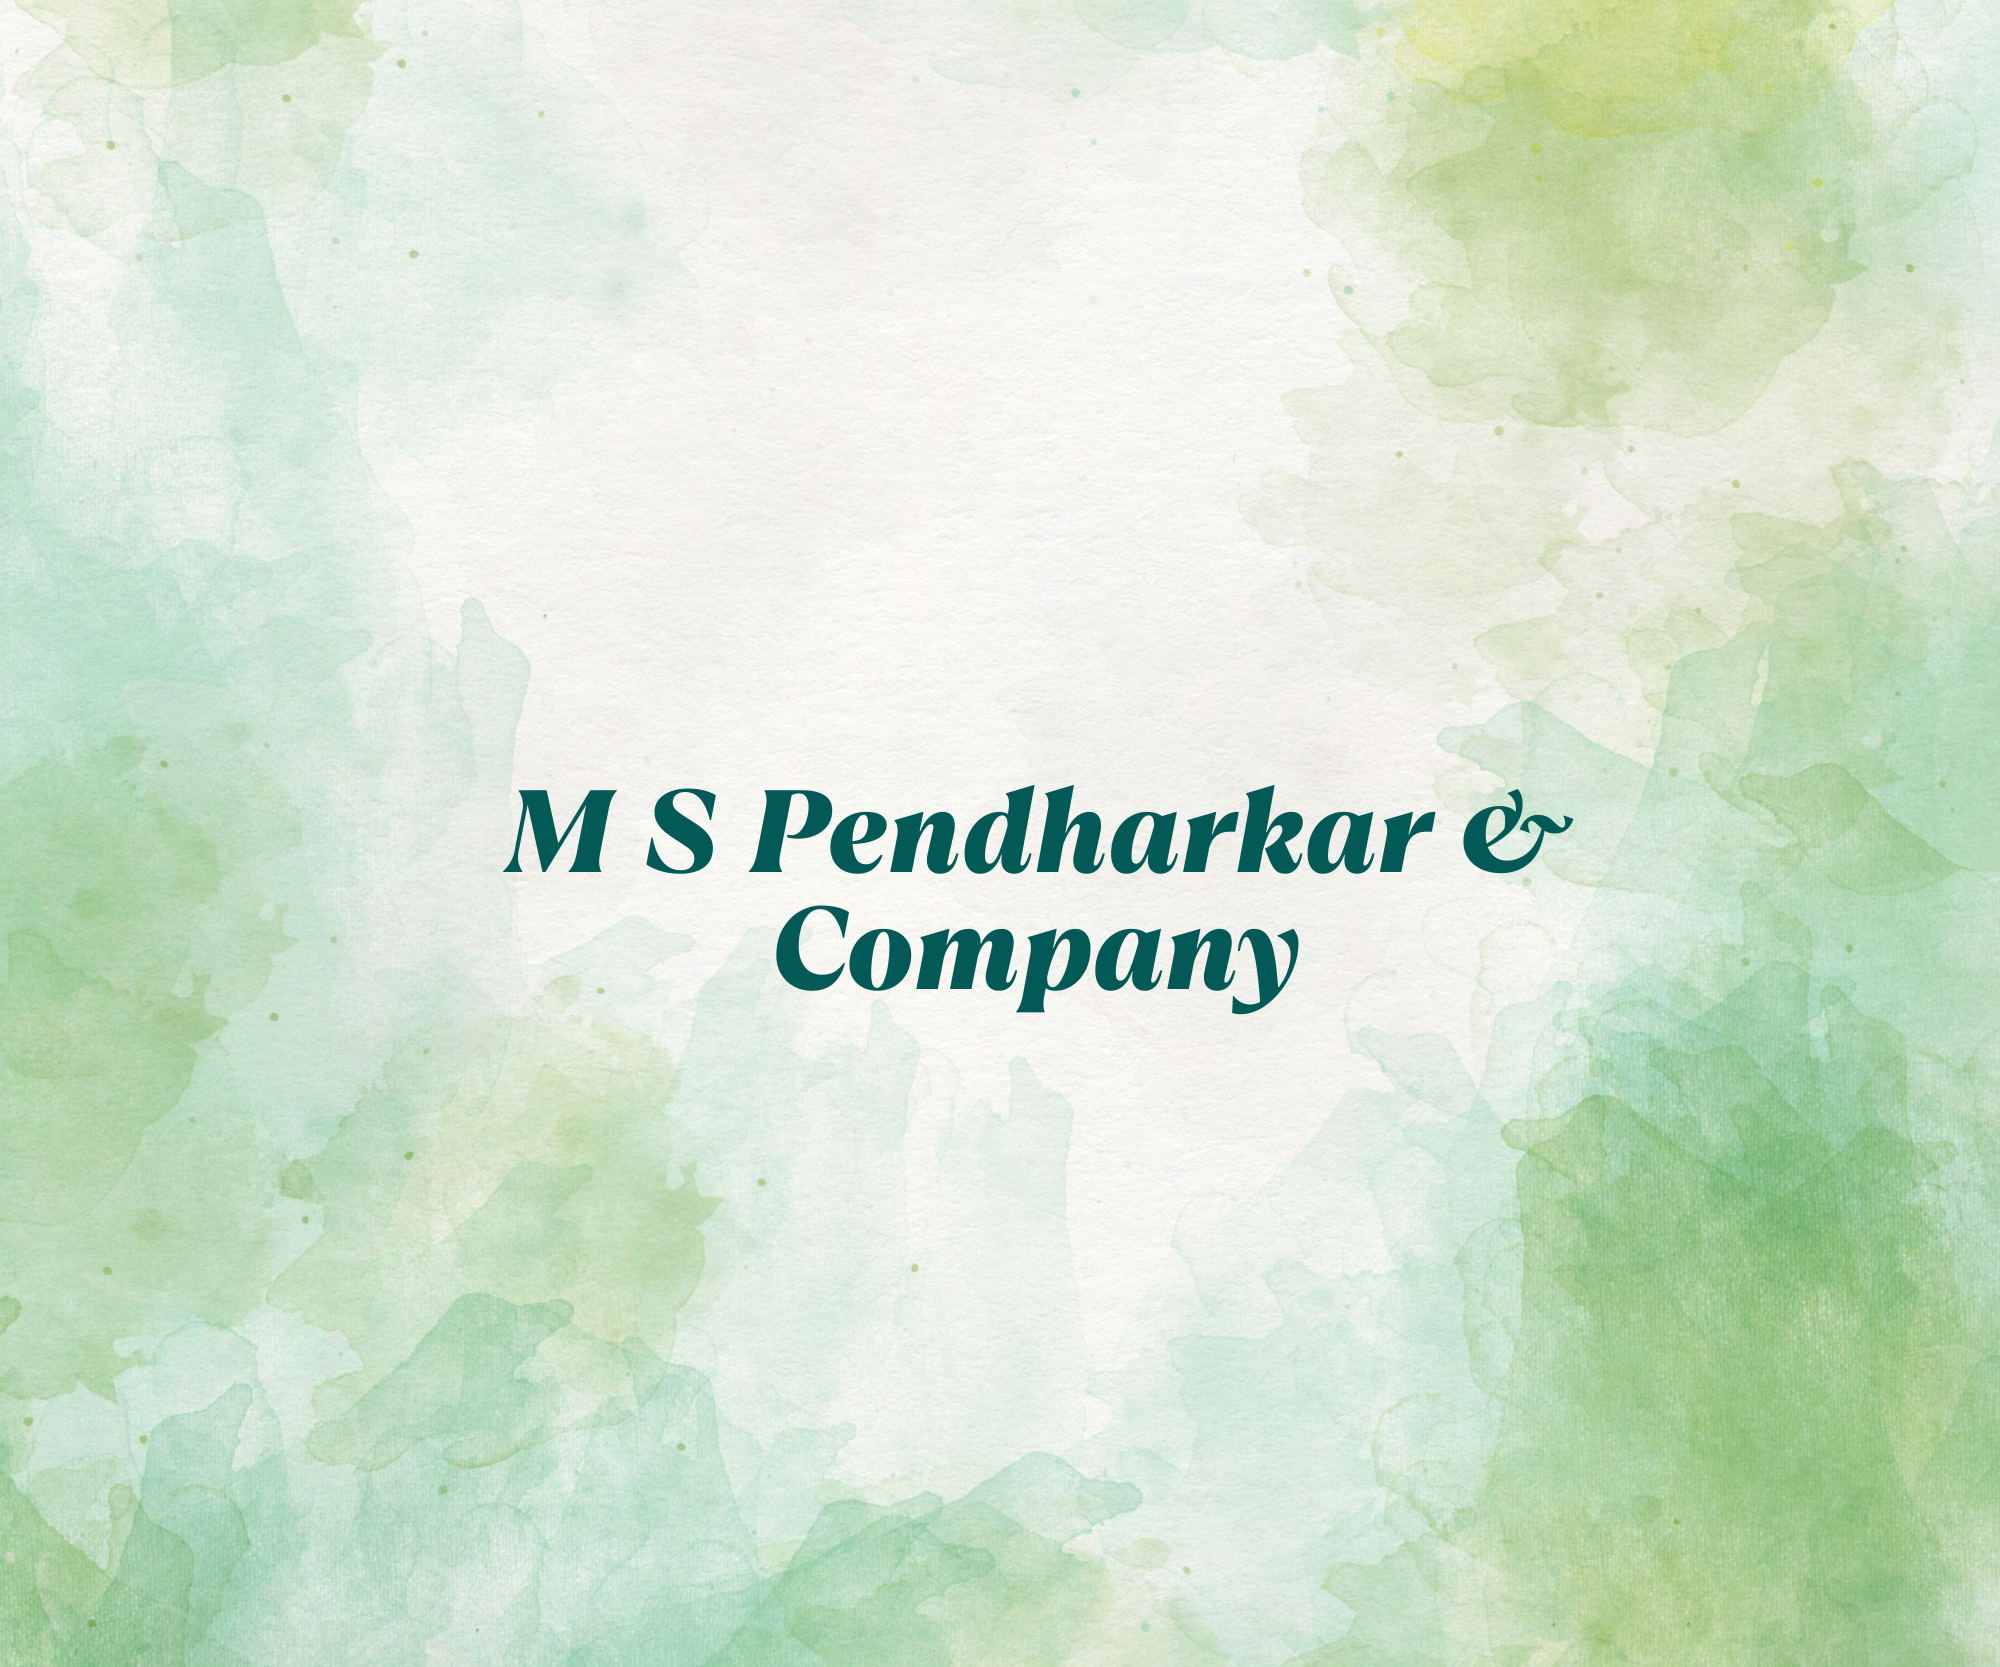 M S Pendharkar & Company  